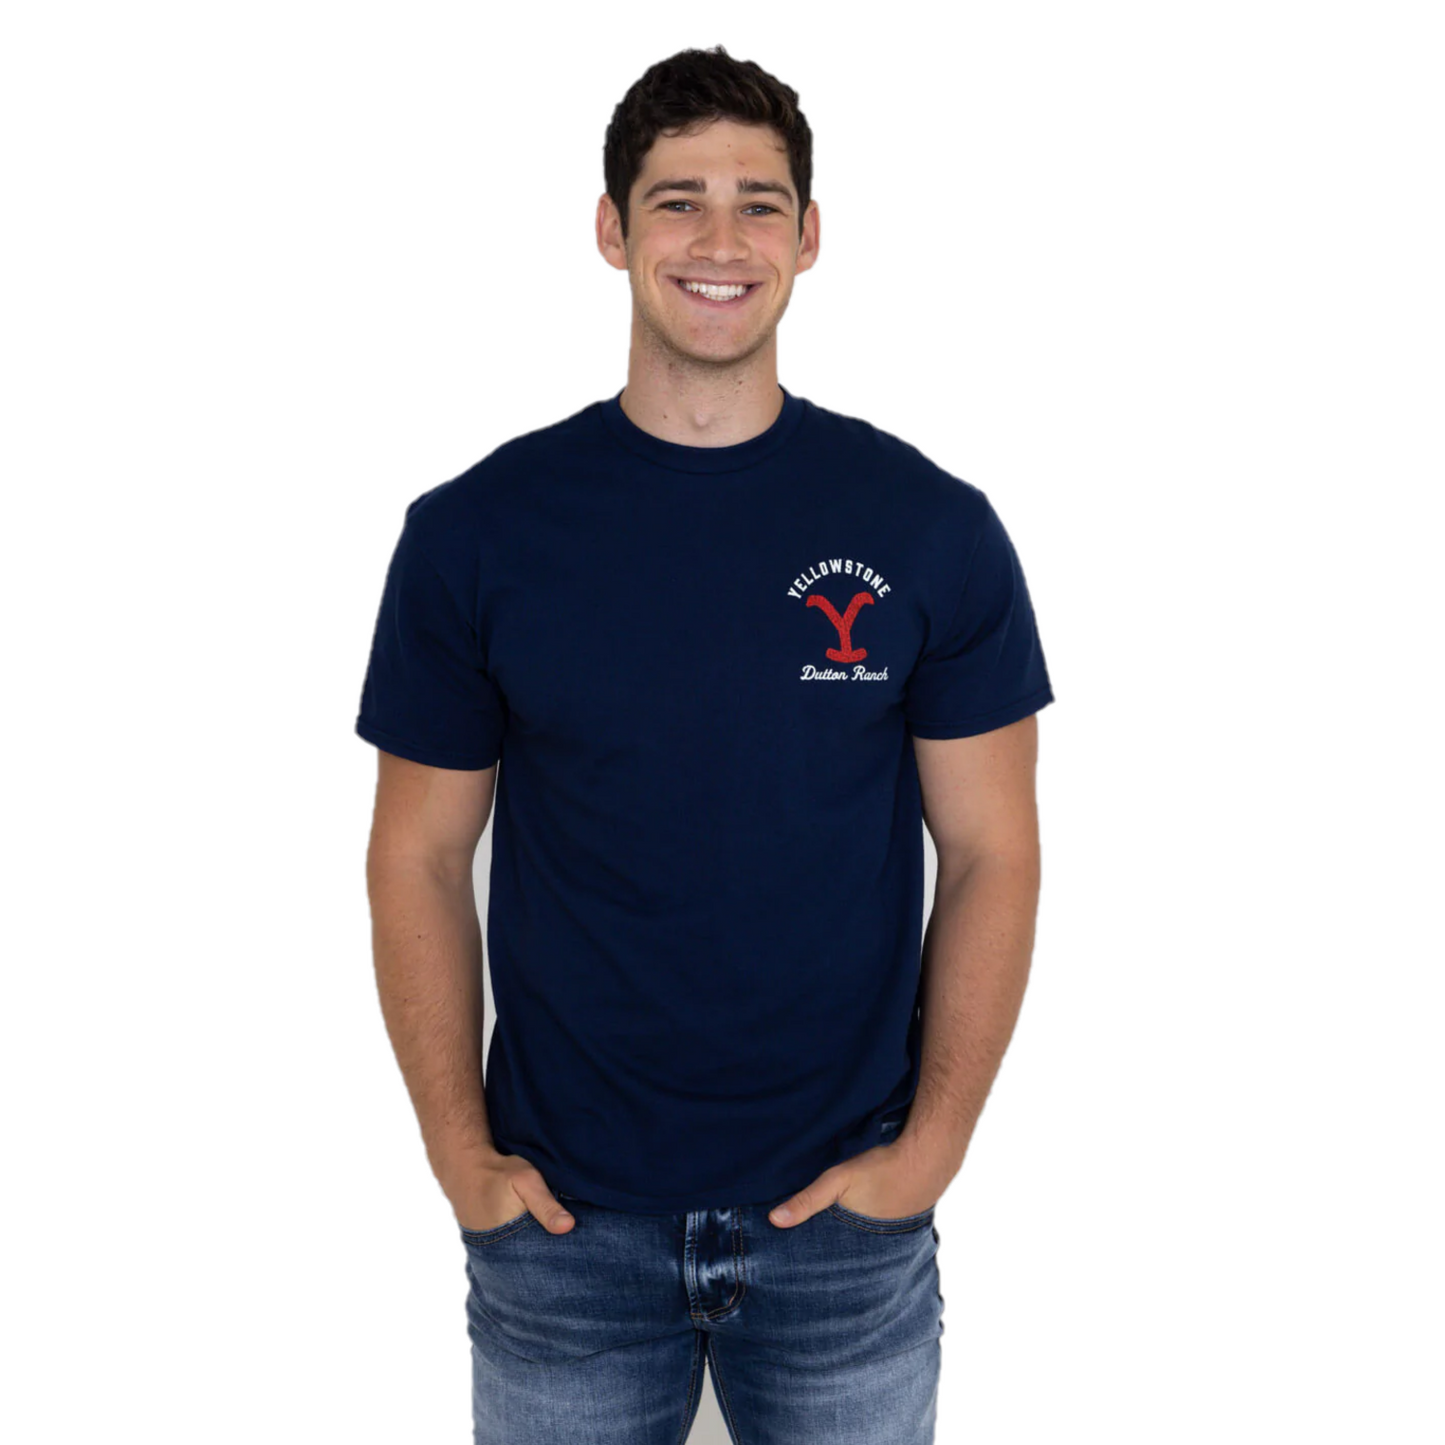 Yellowstone Men's Navy Blue Graphic Short Sleeve T-Shirt 66-331-68